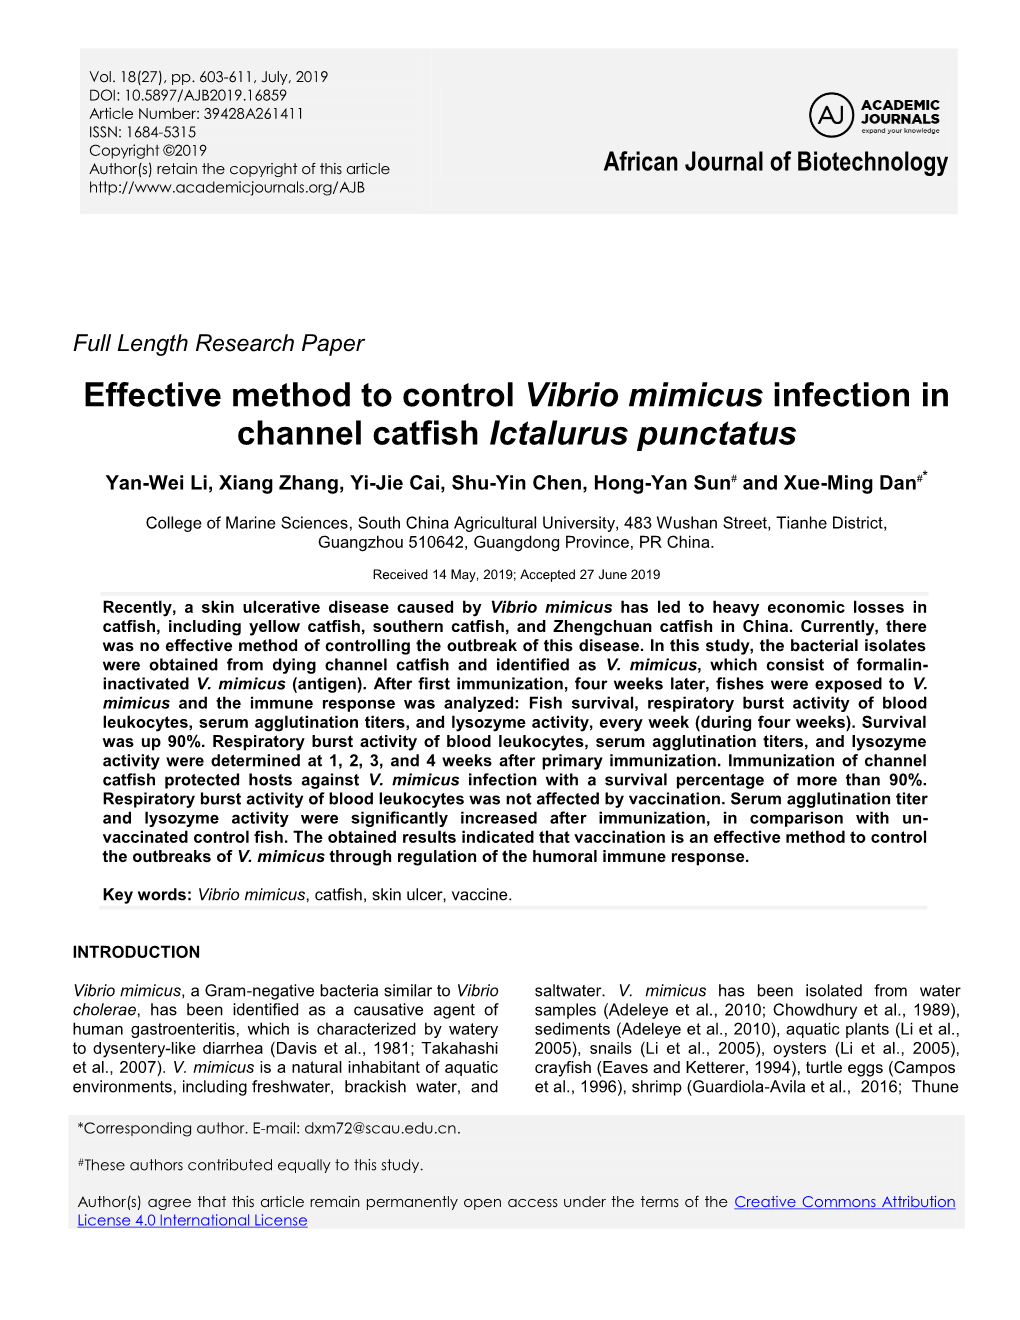 Effective Method to Control Vibrio Mimicus Infection in Channel Catfish Ictalurus Punctatus